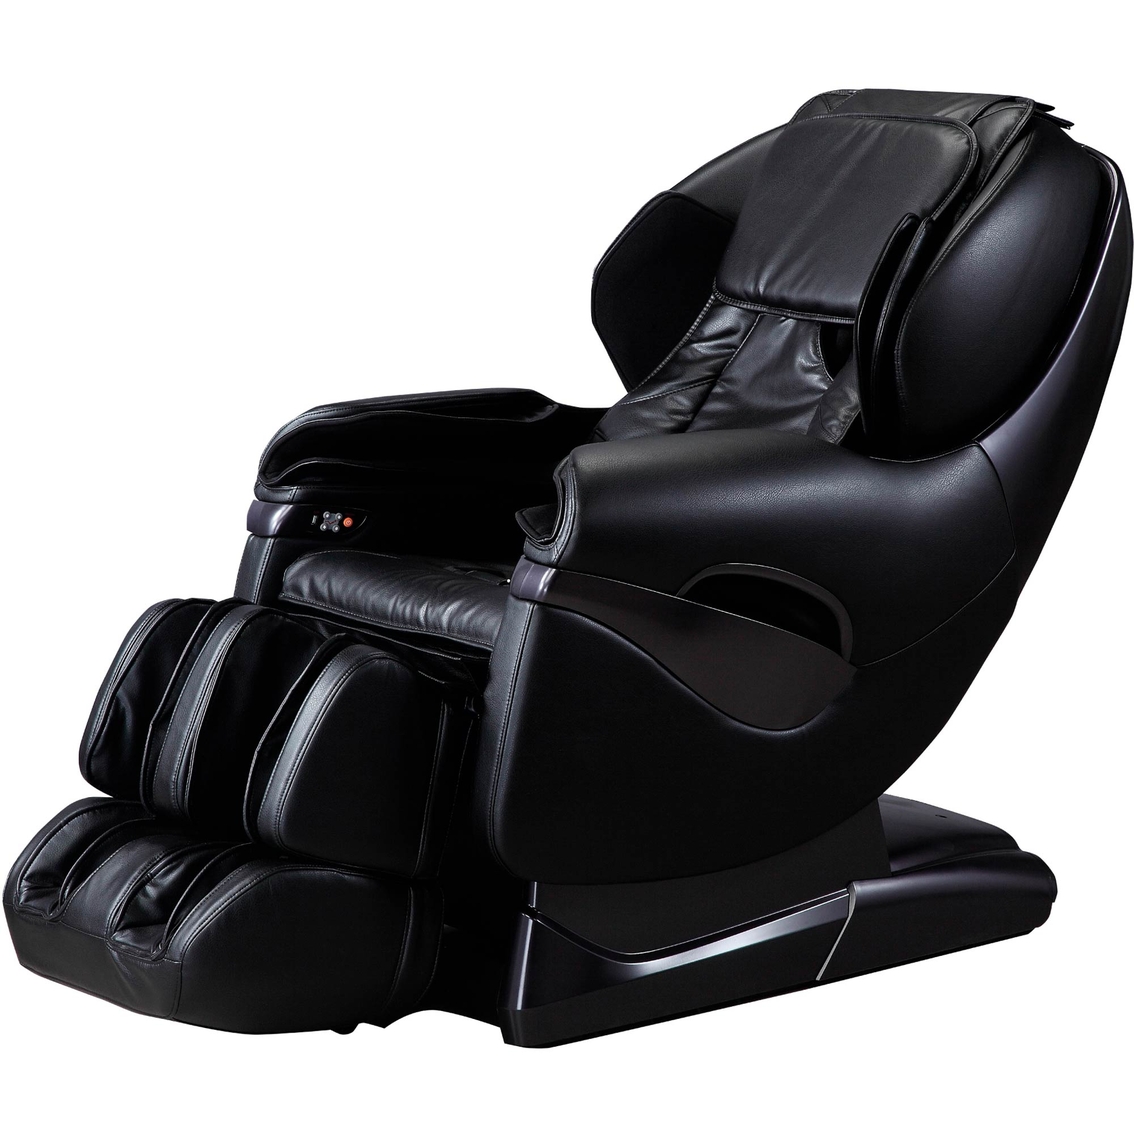 Titan Osaki Tp-8500 Massage Chair | Chairs & Recliners | Furniture